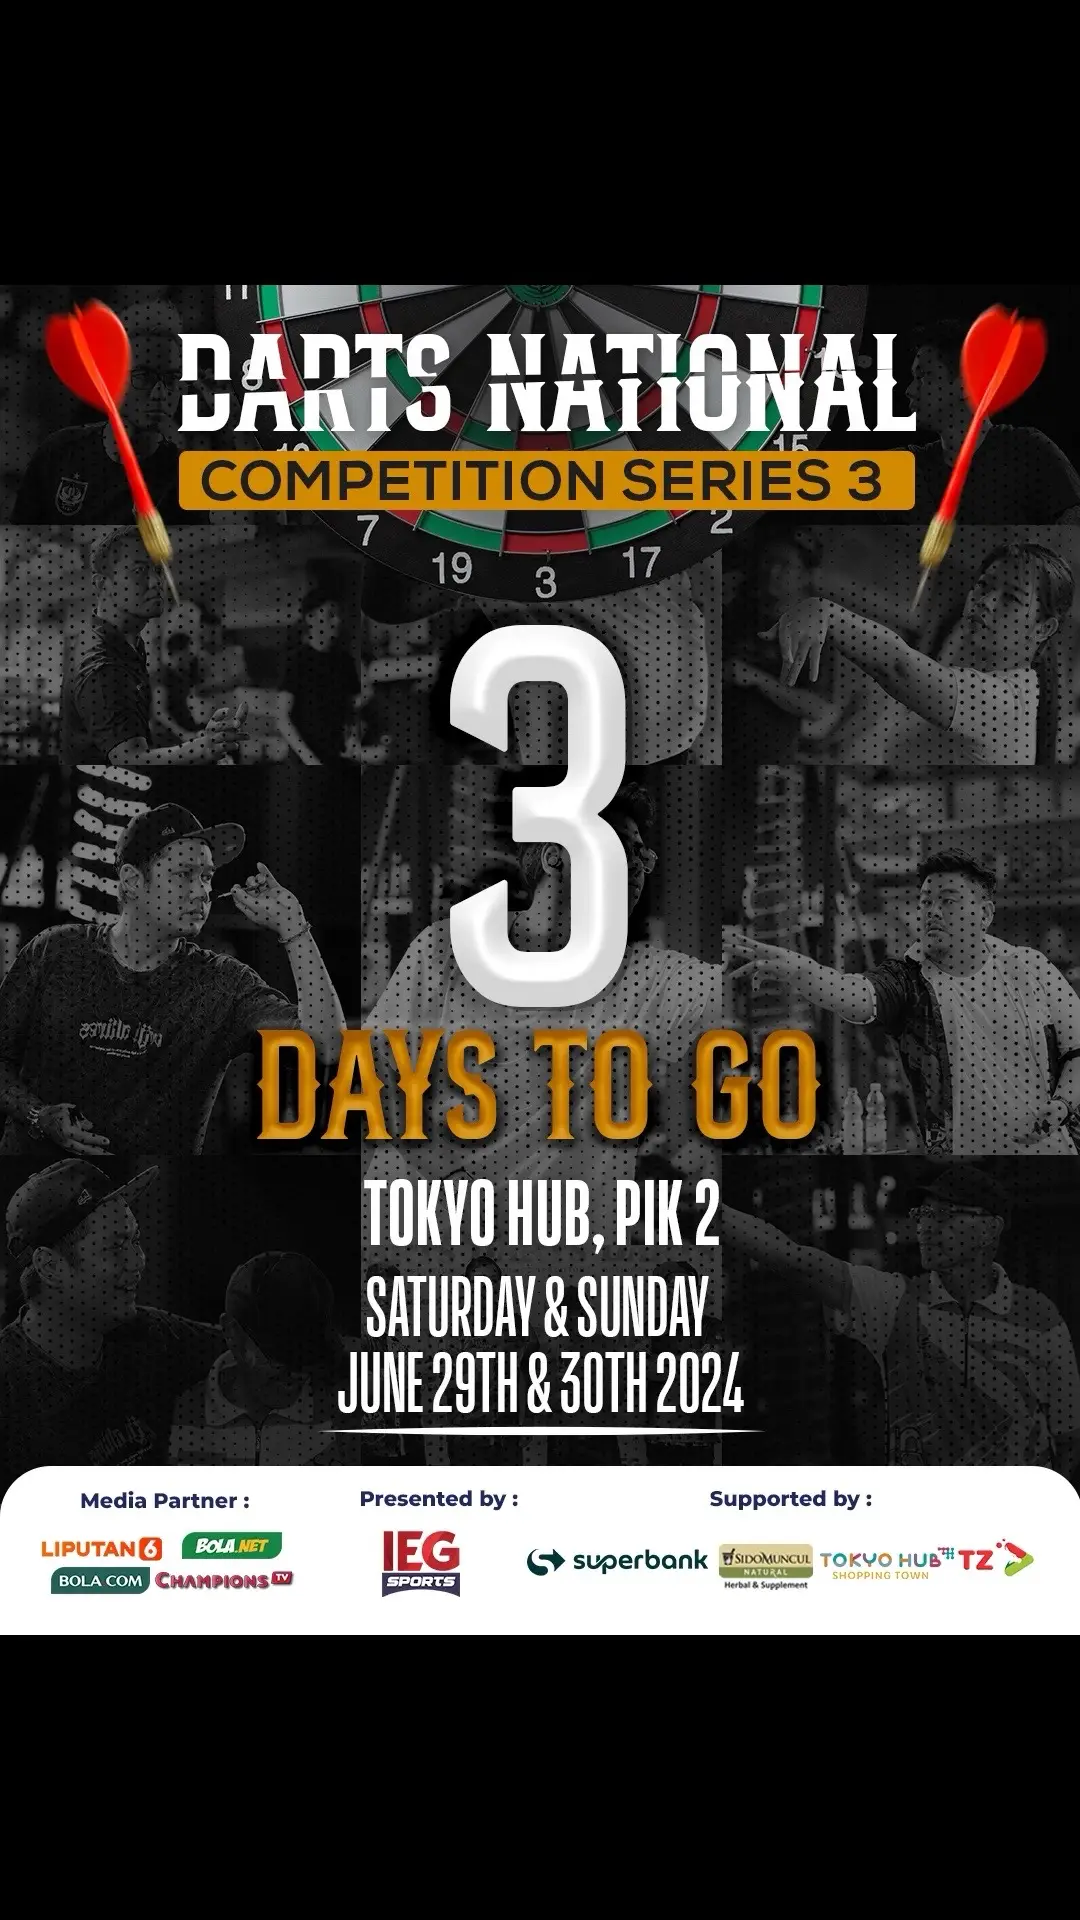 Darts National Competition Series 3 is coming! Join Darts National Competition Series 3 Steel Tip Competition June, 29th - 30th 2024 Tokyo Hub, PIK 2 #darts #dartscompetition #dartstournament #dartsnationalcompetition #dartsindonesia #olahragatiktok 